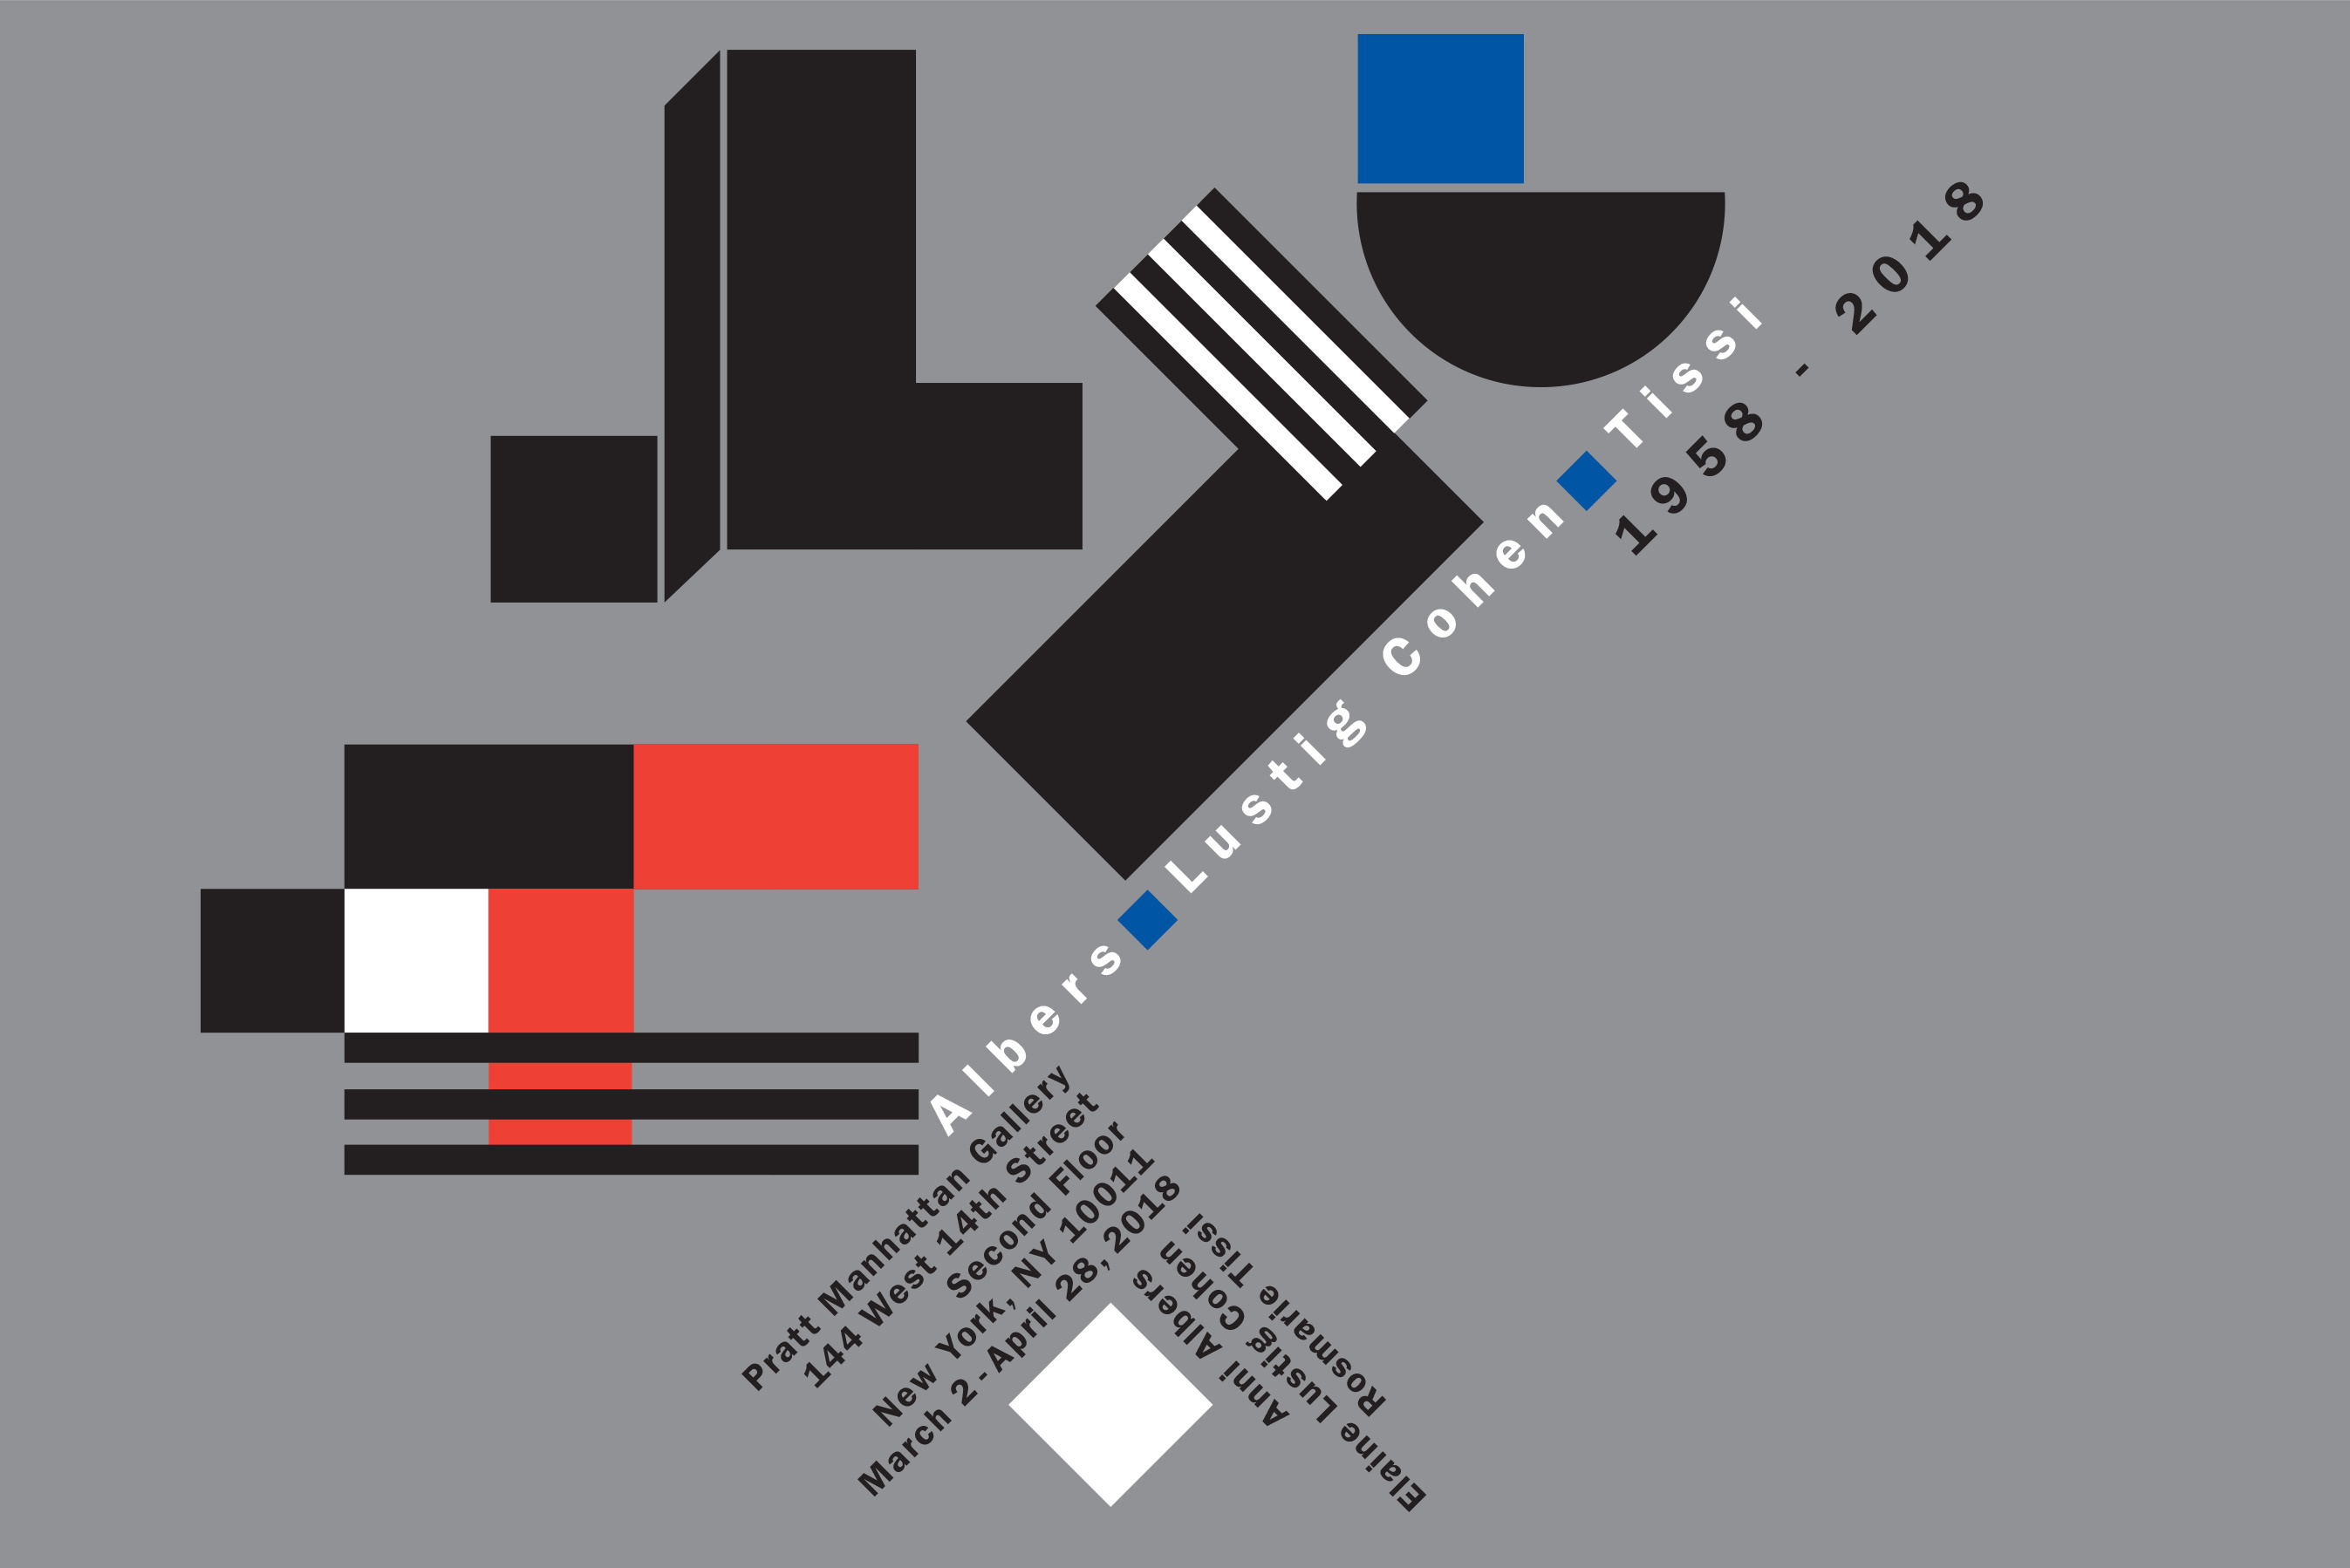 romarie Tissi, 2018，阿尔伯斯，勒斯蒂格，科恩的海报设计，1958-2018年，委托普拉特研究所。(图片来自普拉特研究所)